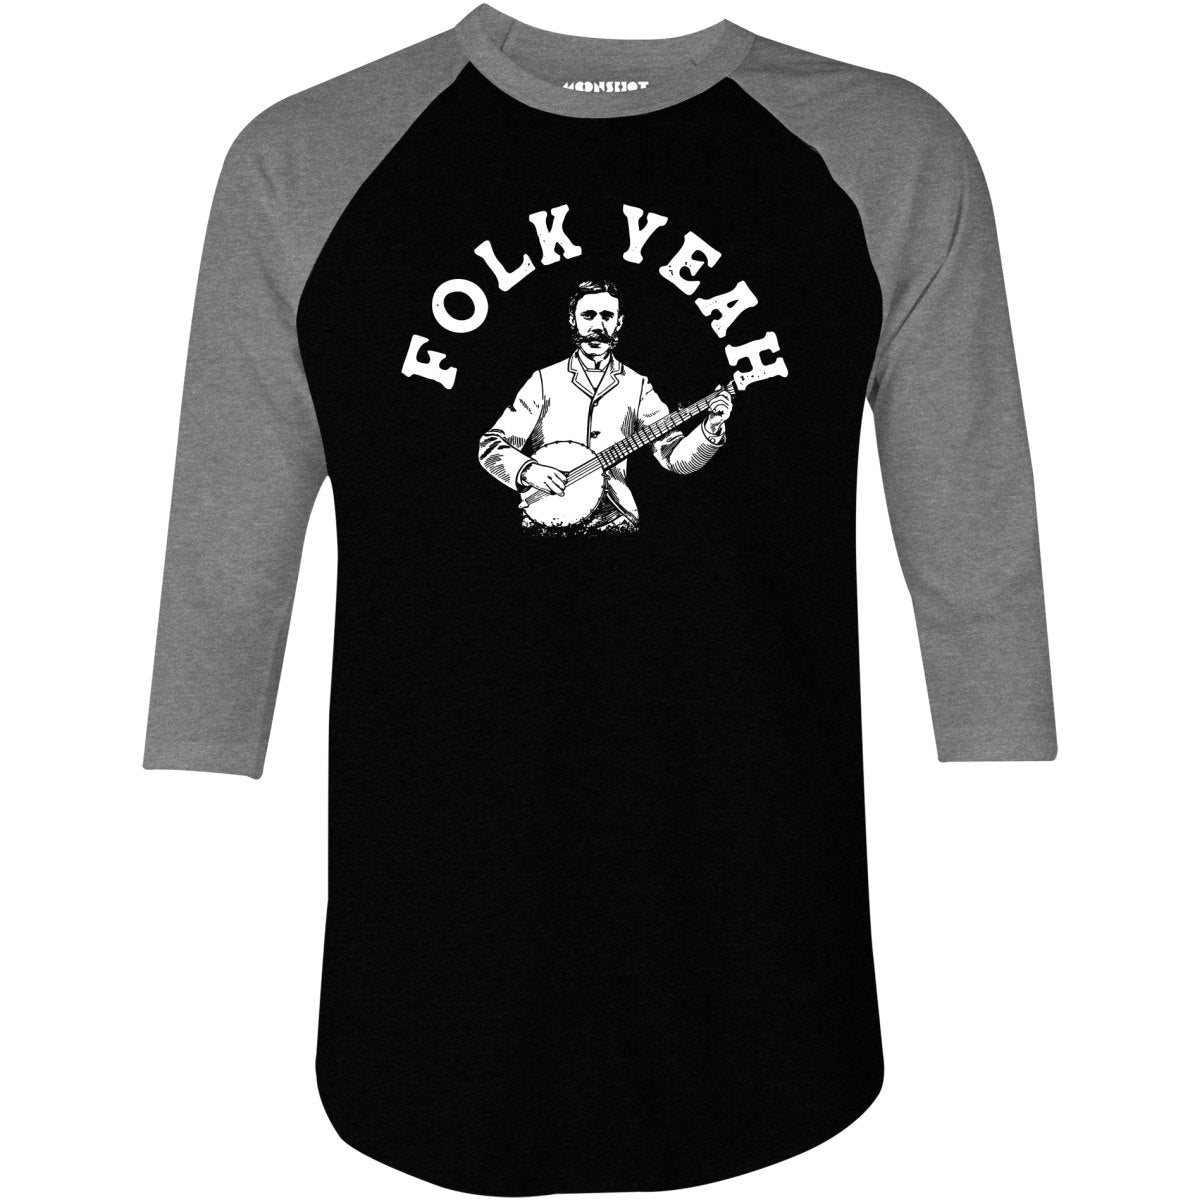 Folk Yeah - 3/4 Sleeve Raglan T-Shirt